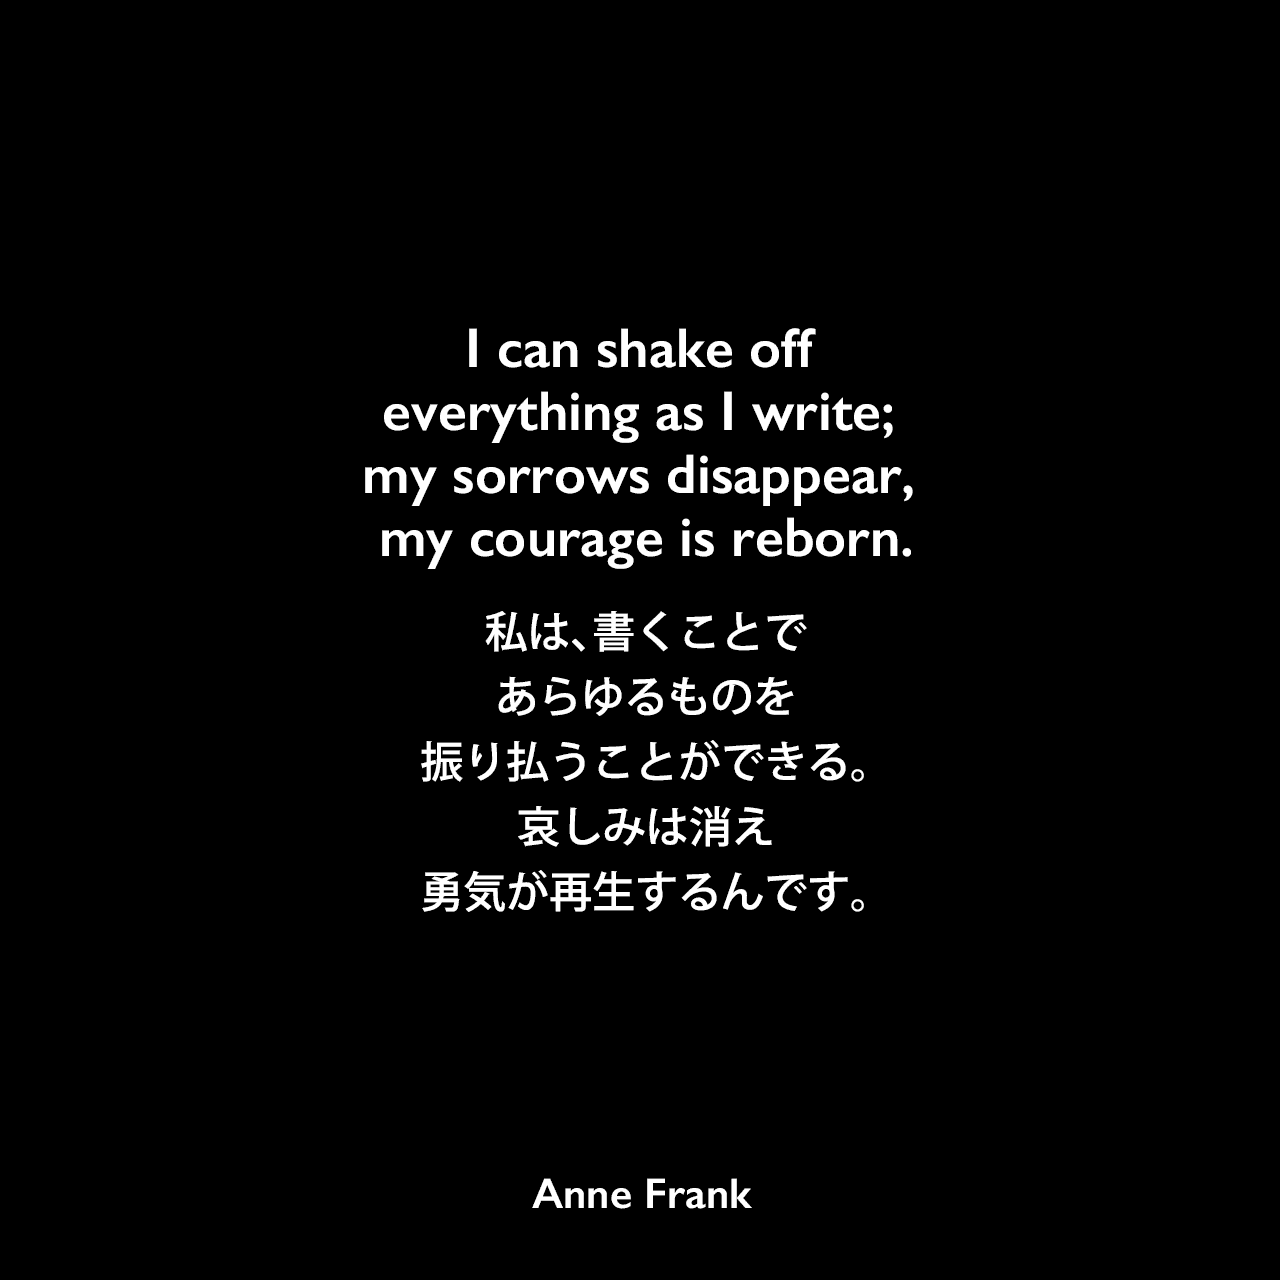 I can shake off everything as I write; my sorrows disappear, my courage is reborn.私は、書くことであらゆるものを振り払うことができる。哀しみは消え、勇気が再生するんです。Anne Frank